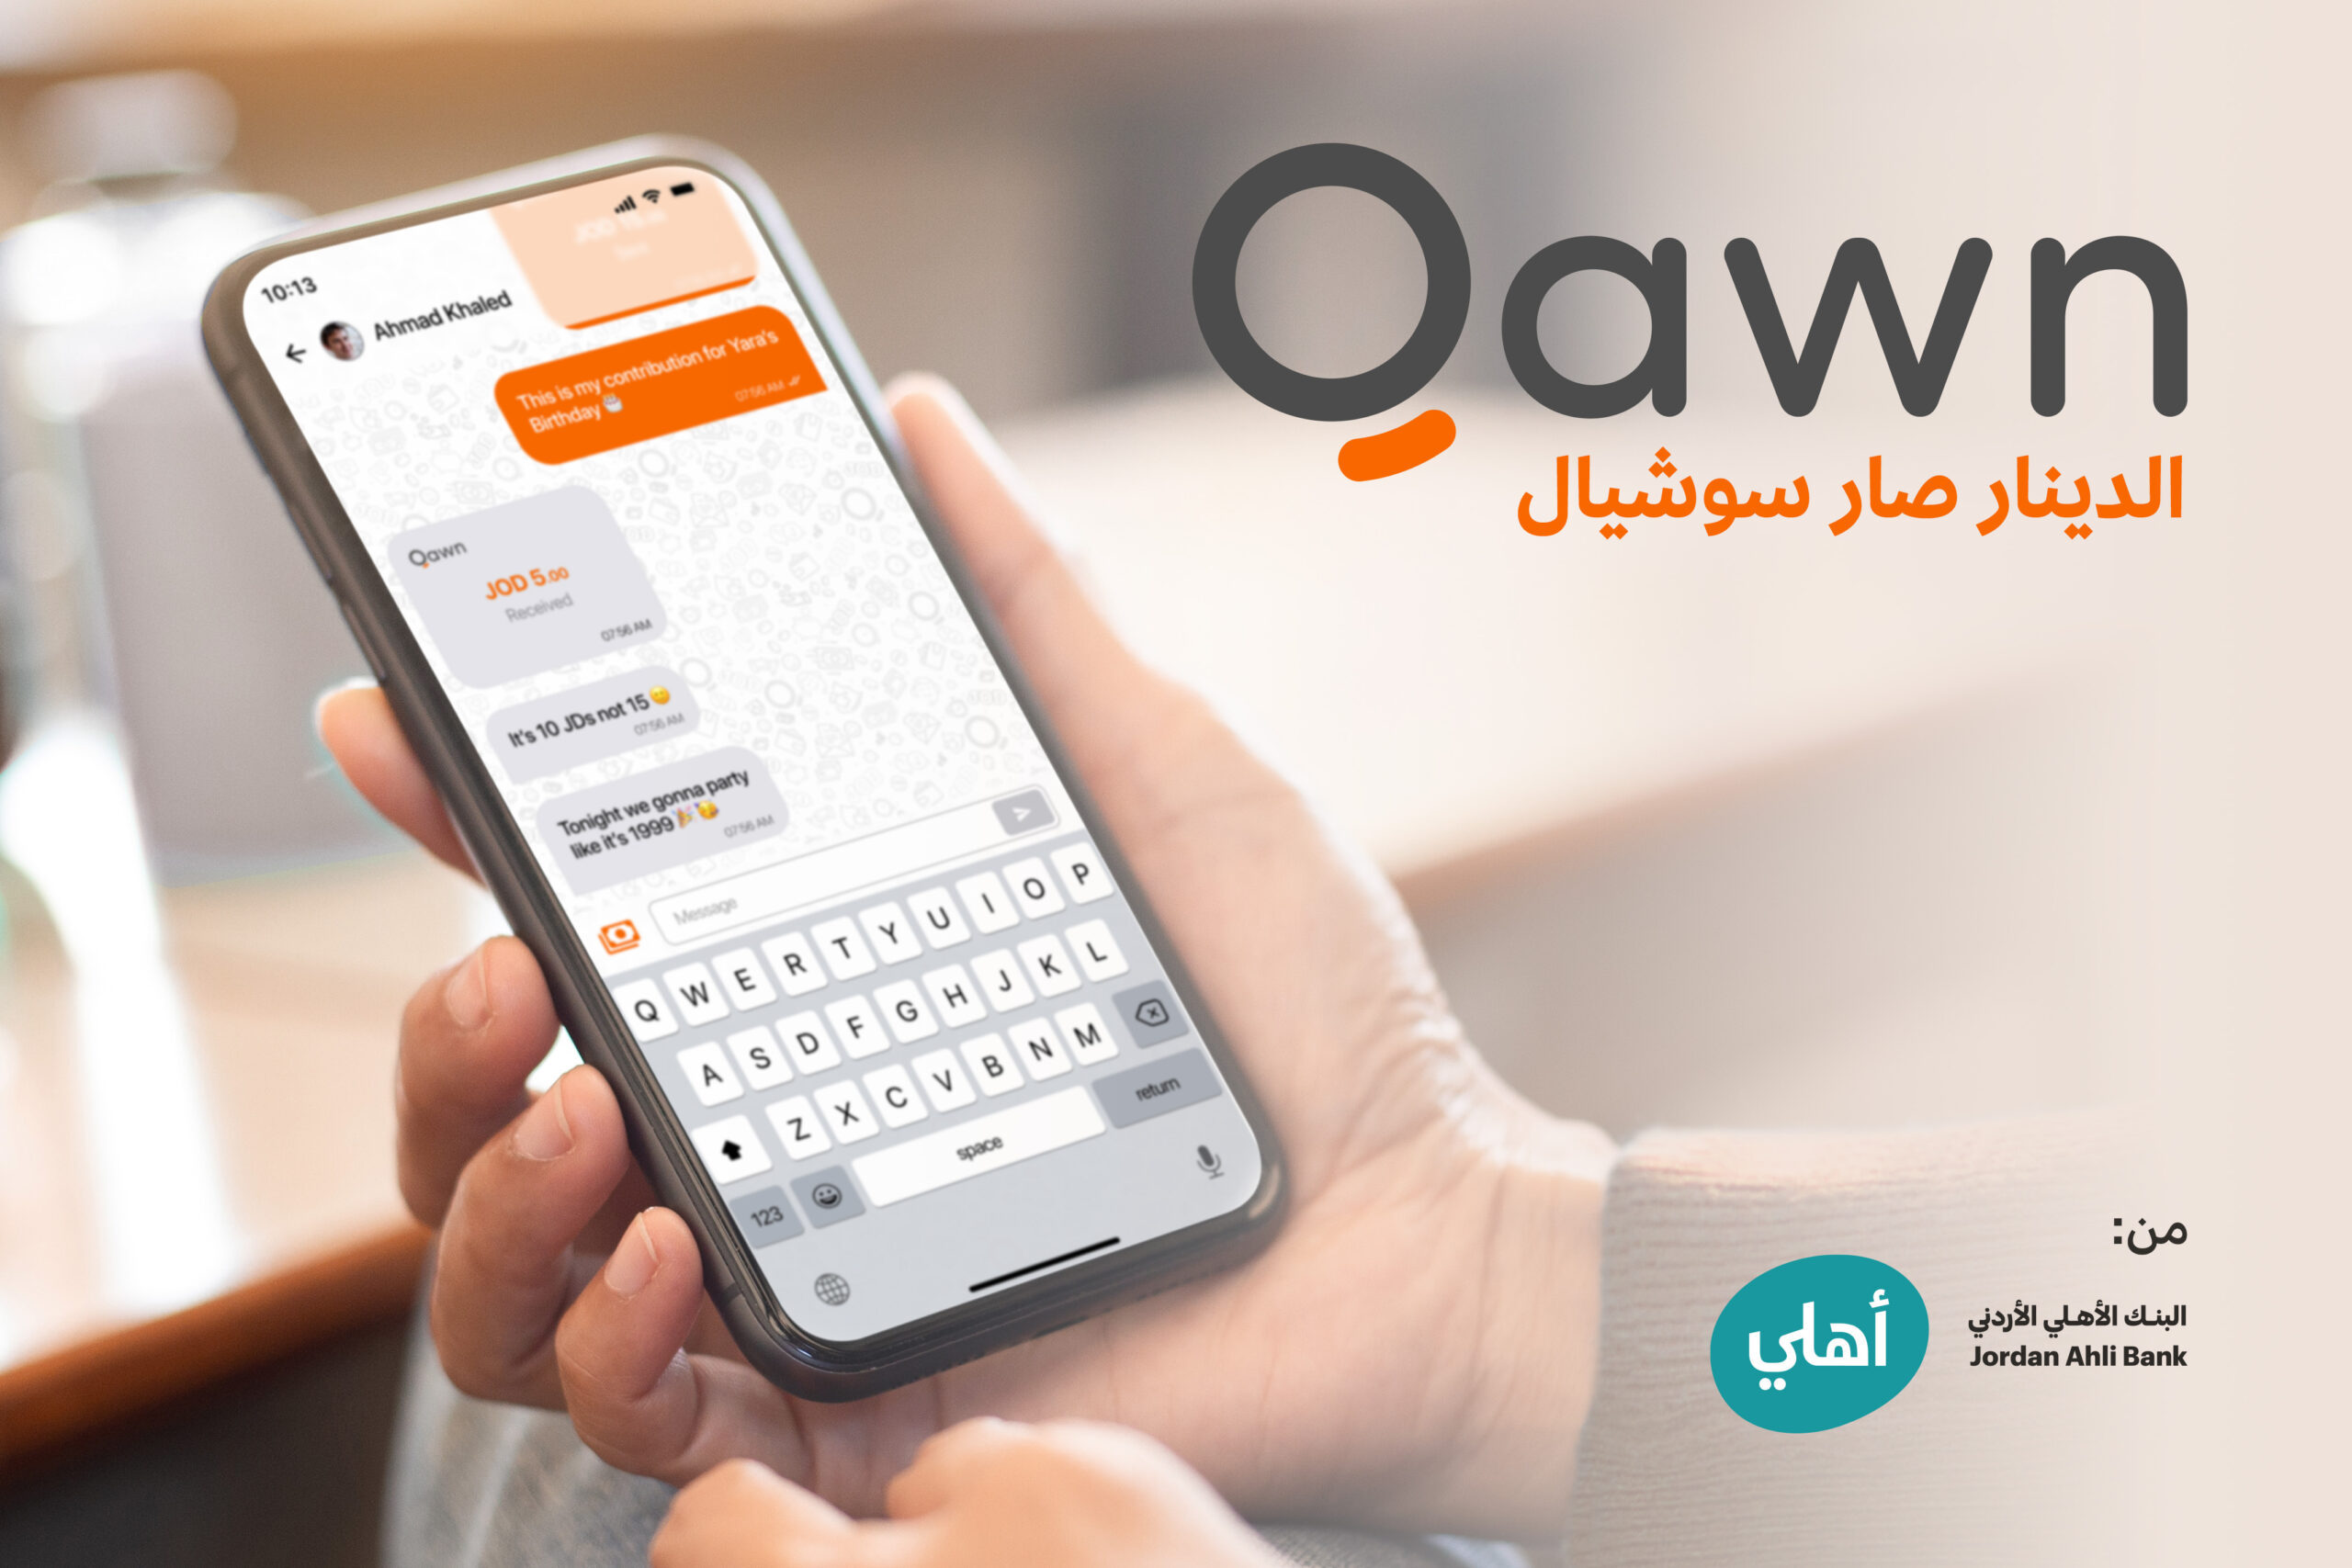 Jordan Ahli Bank Introduces Qawn, Jordan’s First Social Payment App